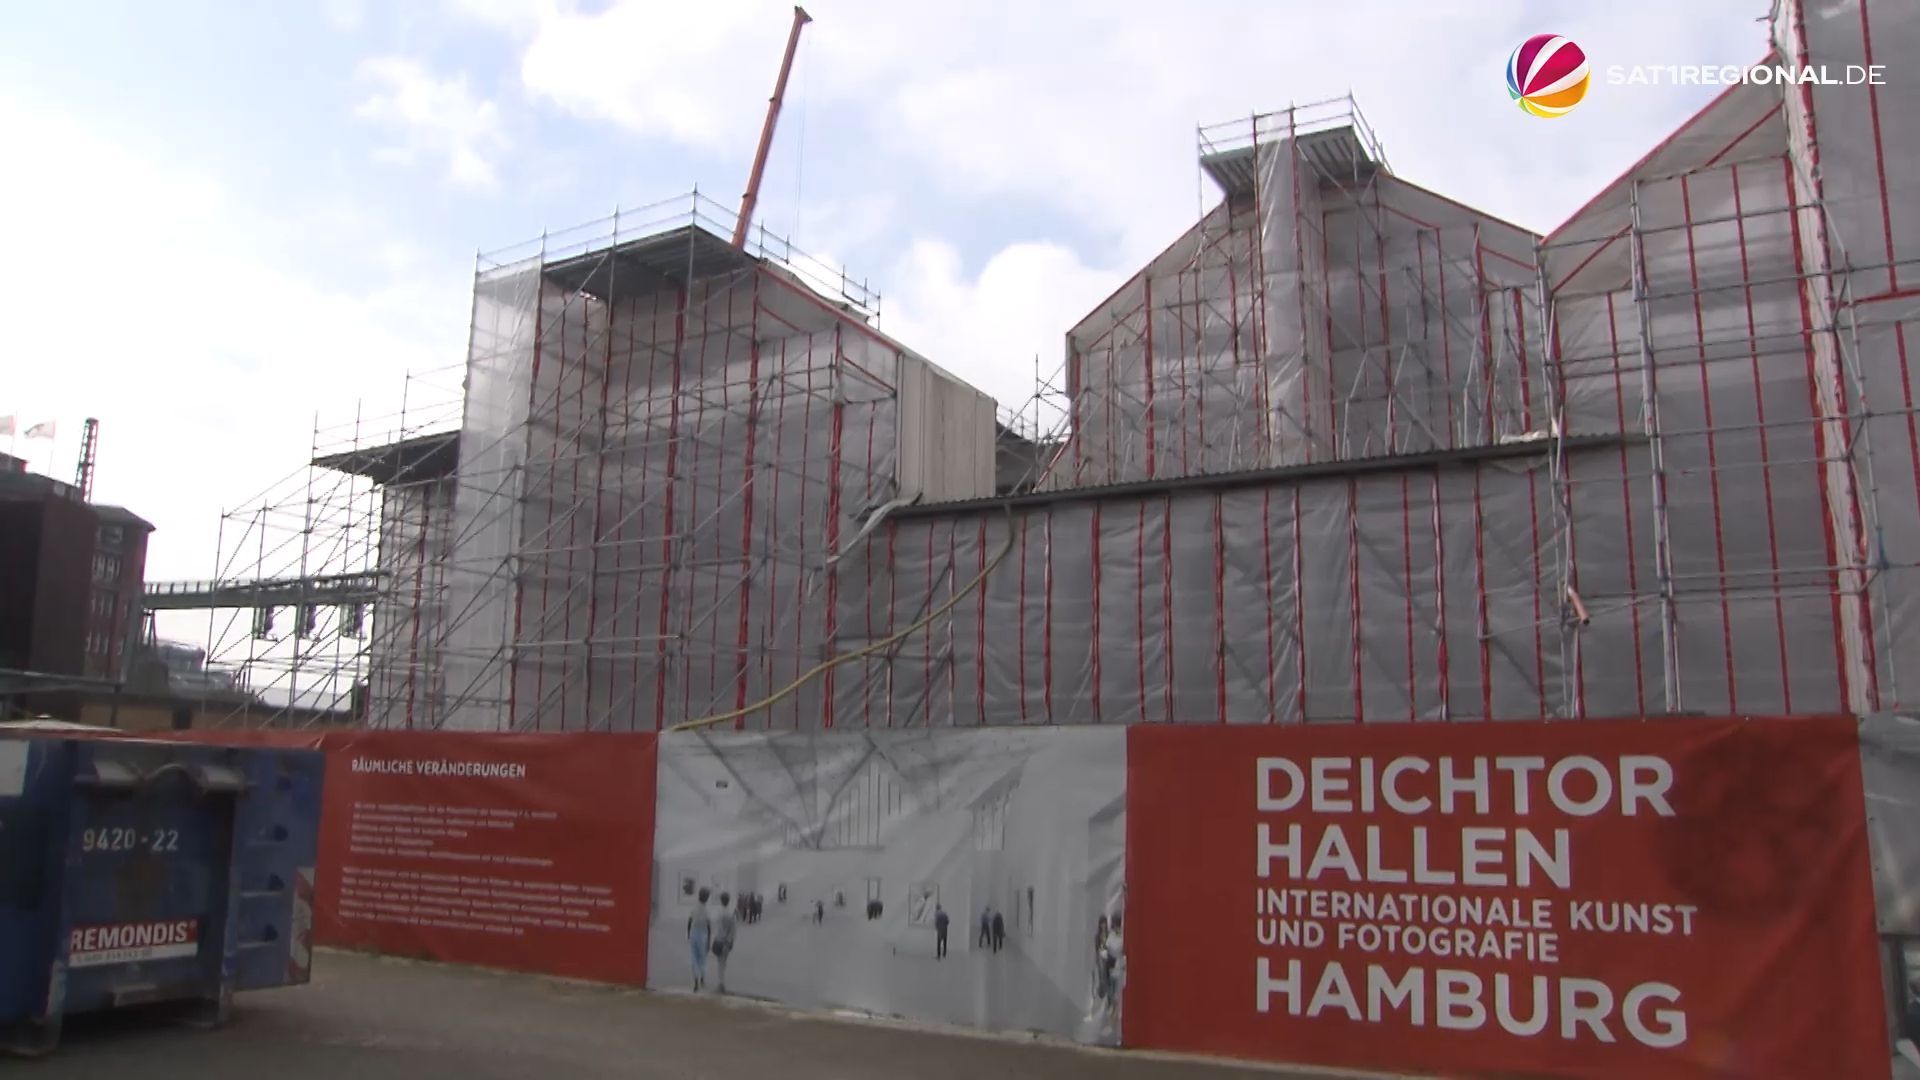 House of Photography in Deichtorhallen: Refurbishment takes longer